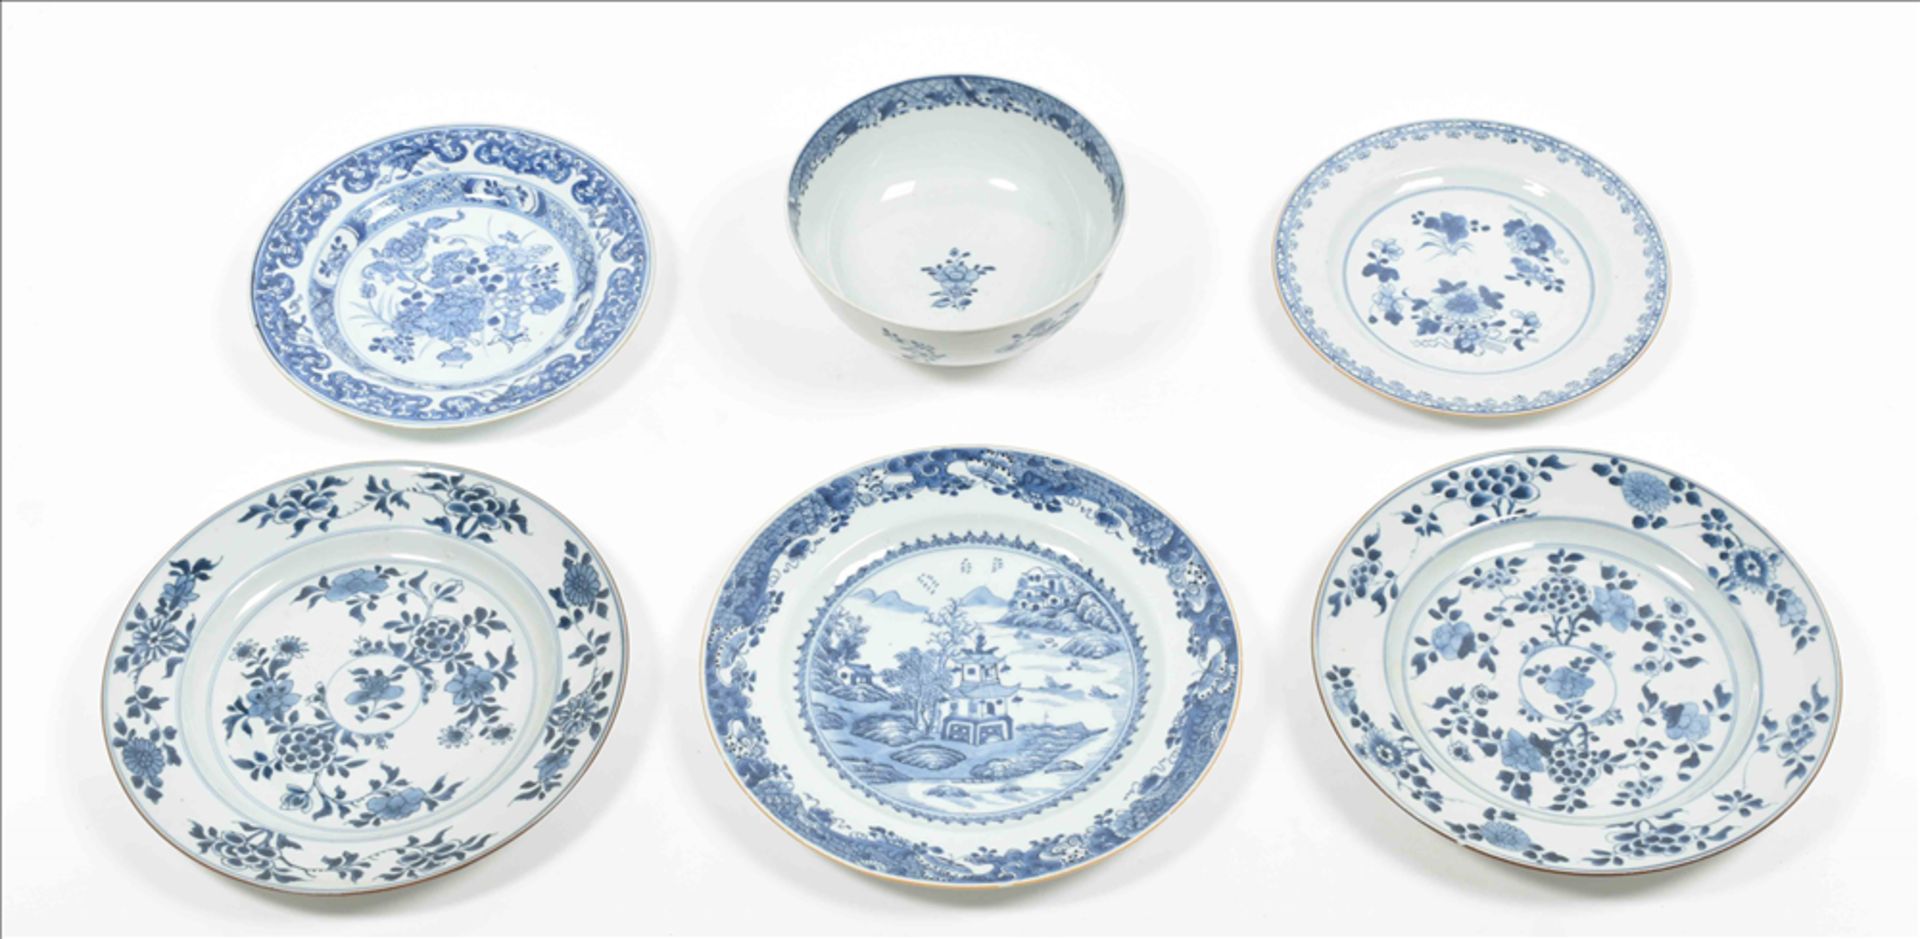 Five porcelain plates and a bowl